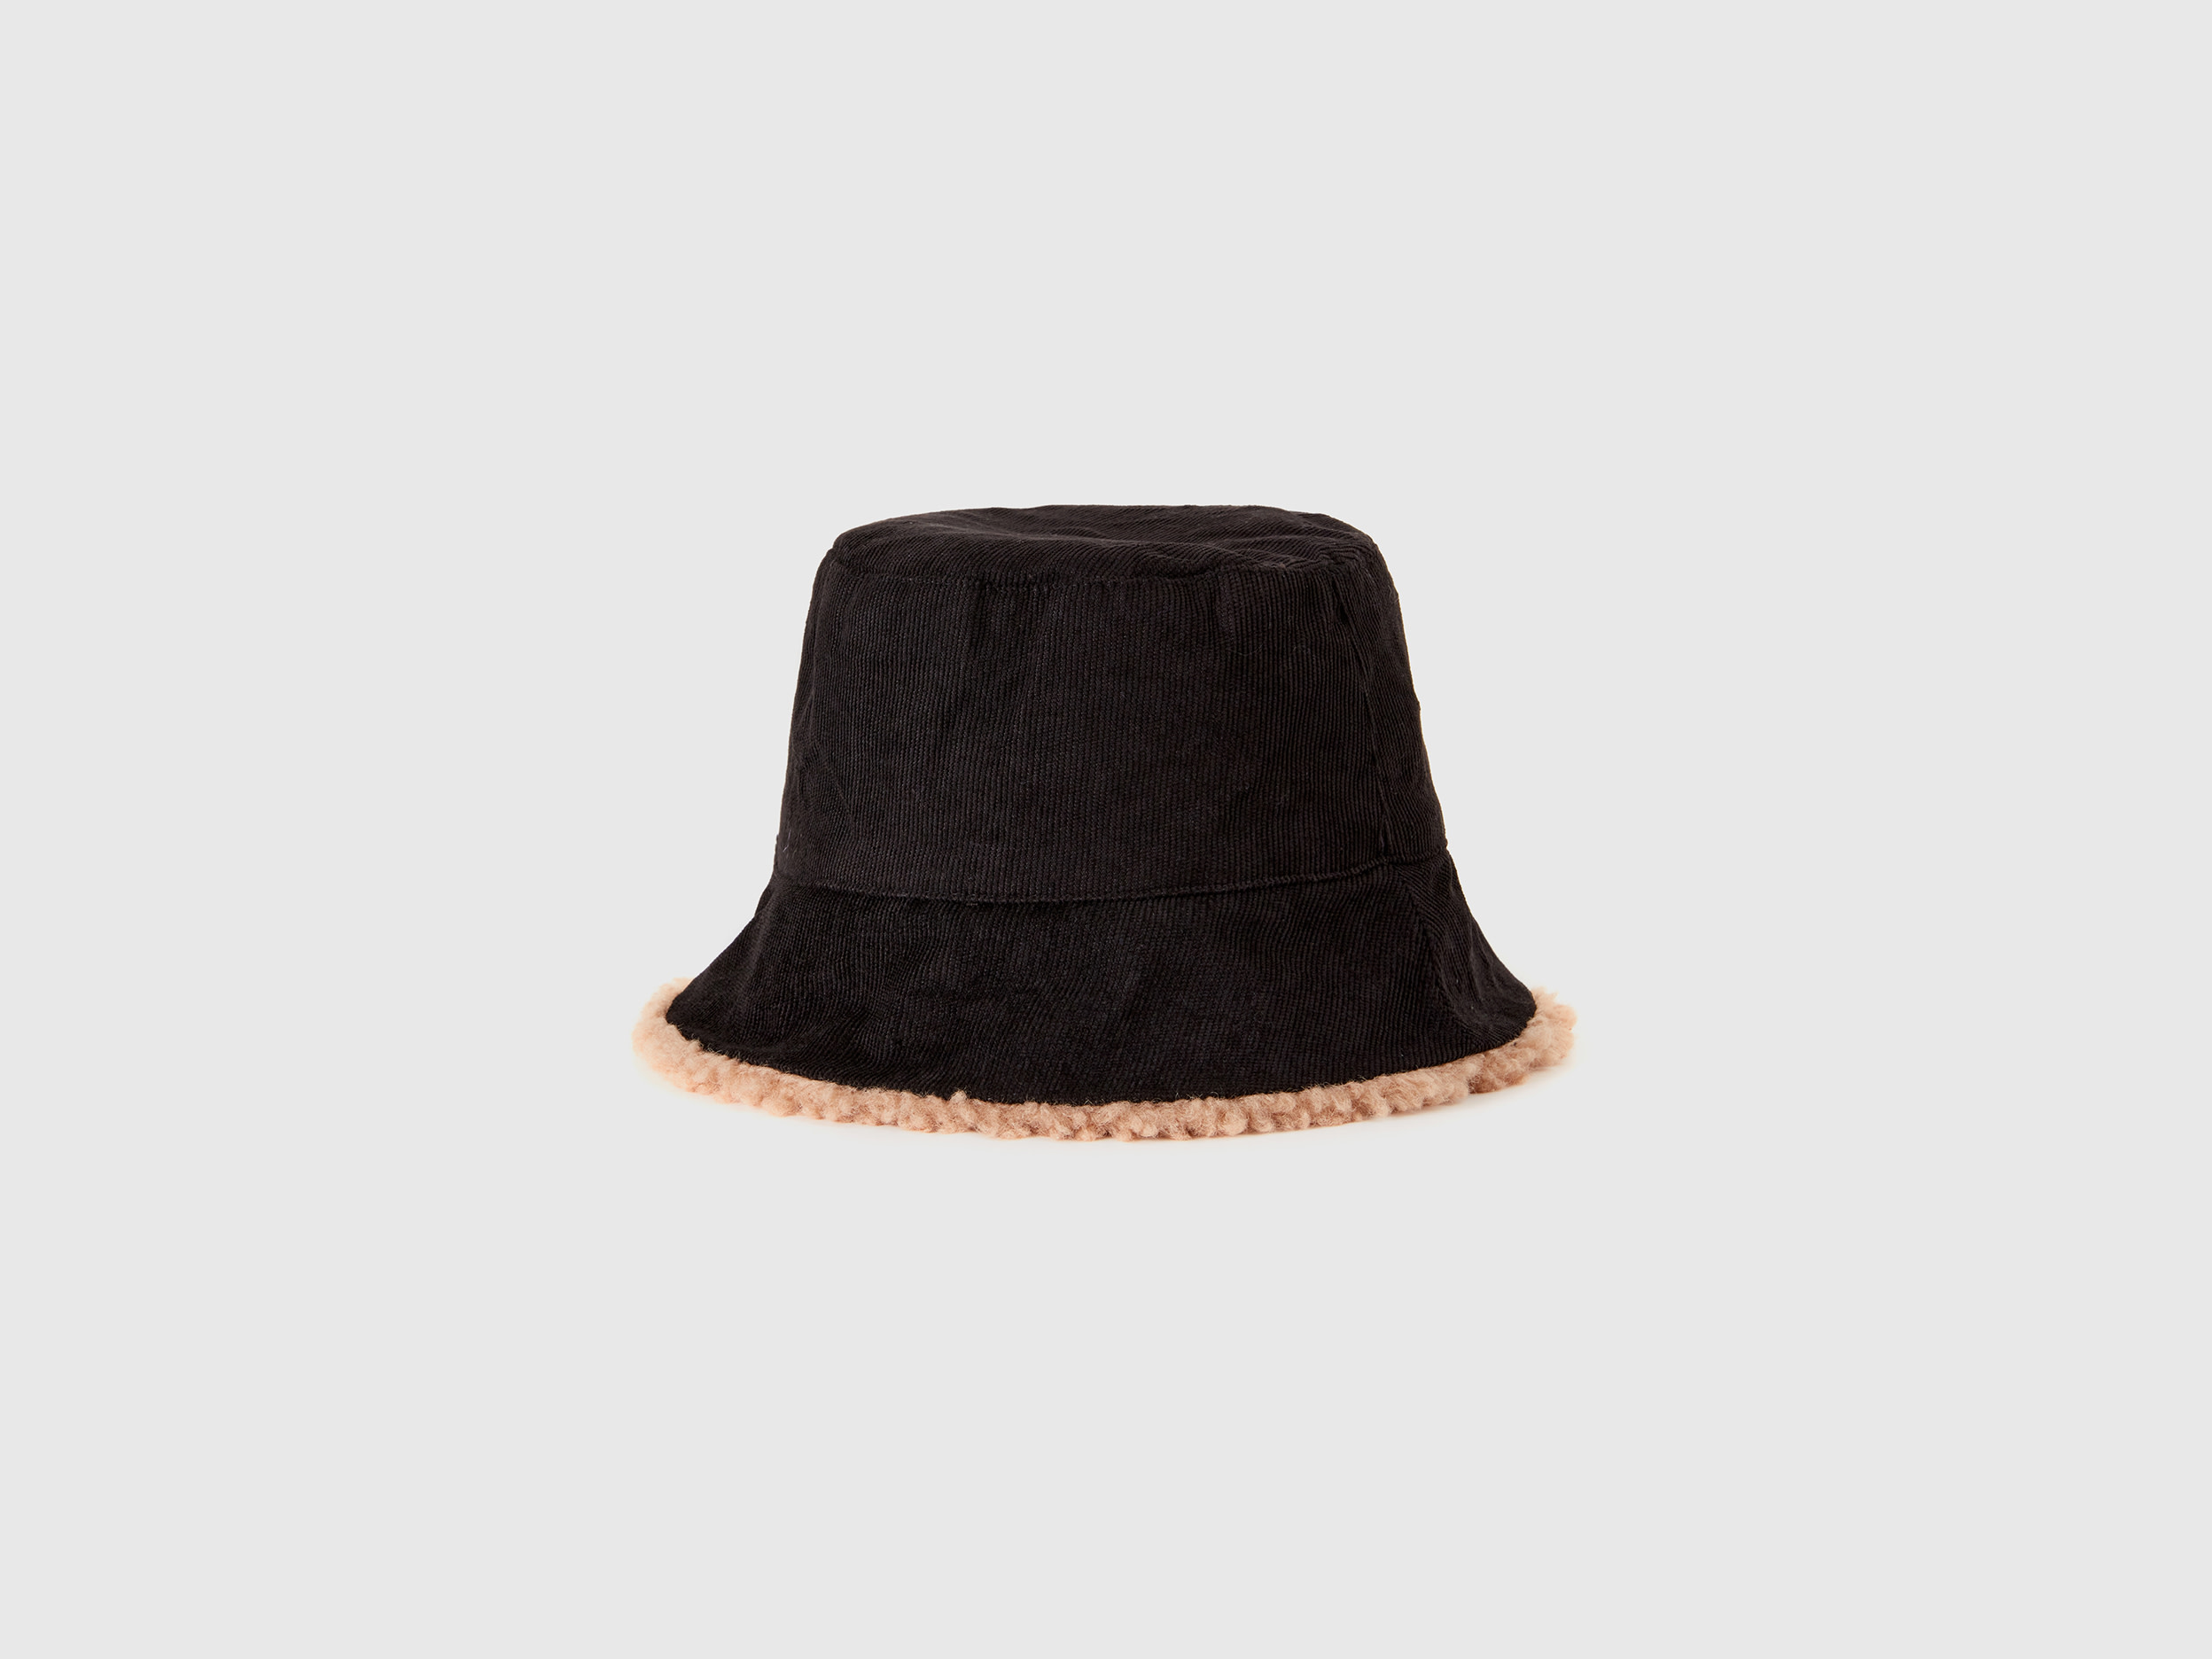 Benetton, Reversible Bucket Hat, size L, Brown, Women